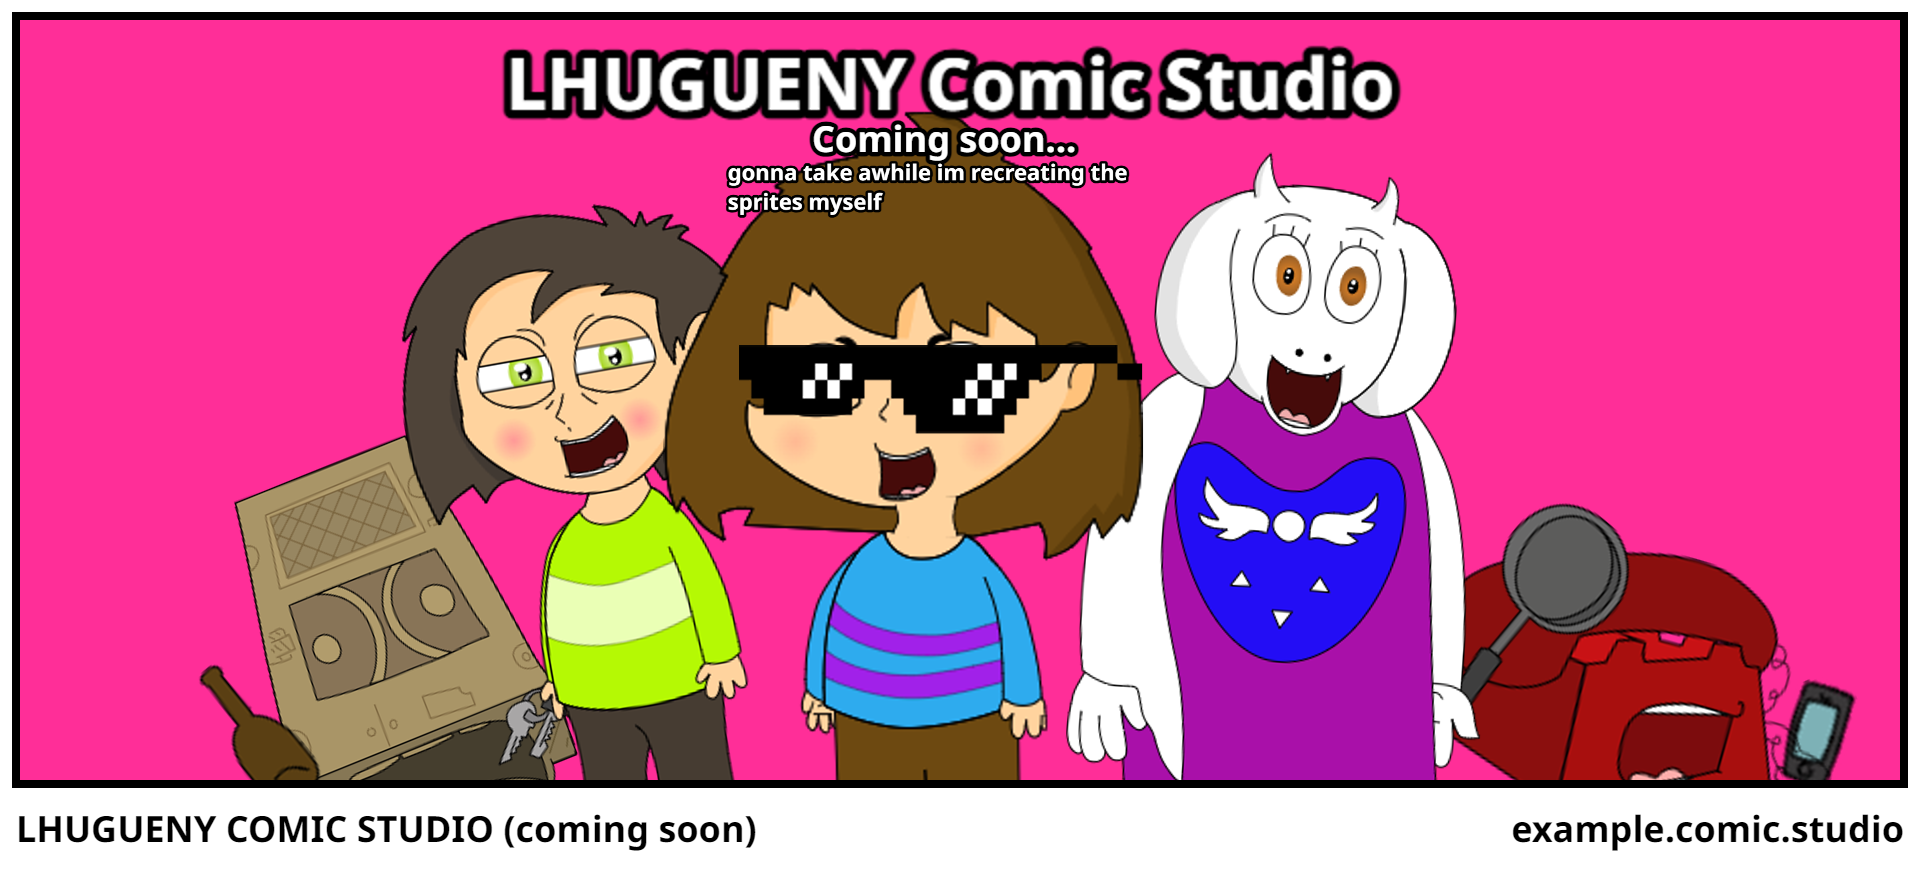 LHUGUENY COMIC STUDIO (coming soon)